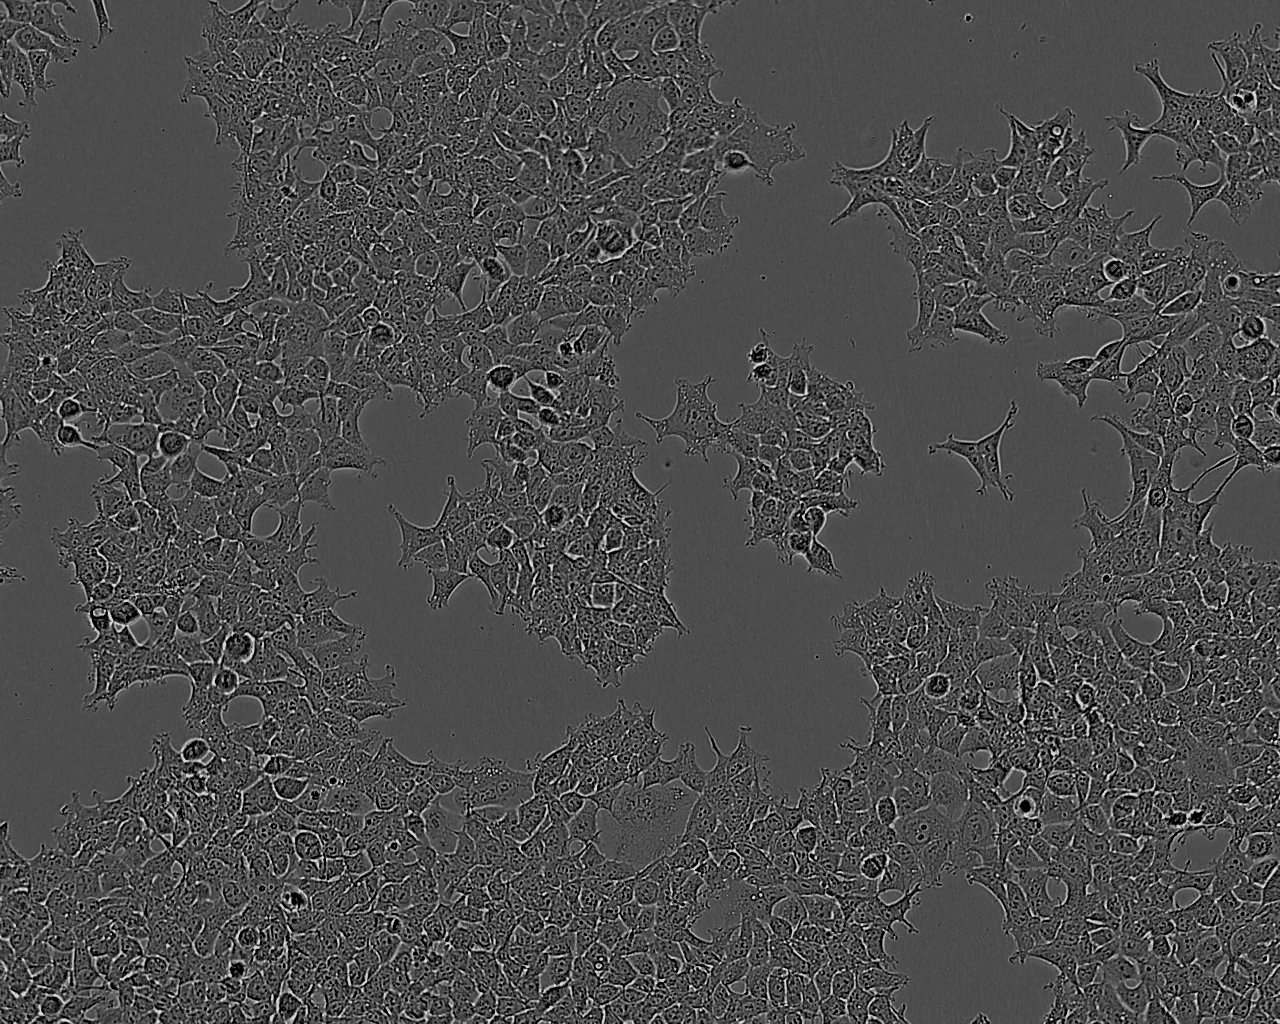 IMR-32 Cell|人神经母细胞瘤细胞,IMR-32 Cell